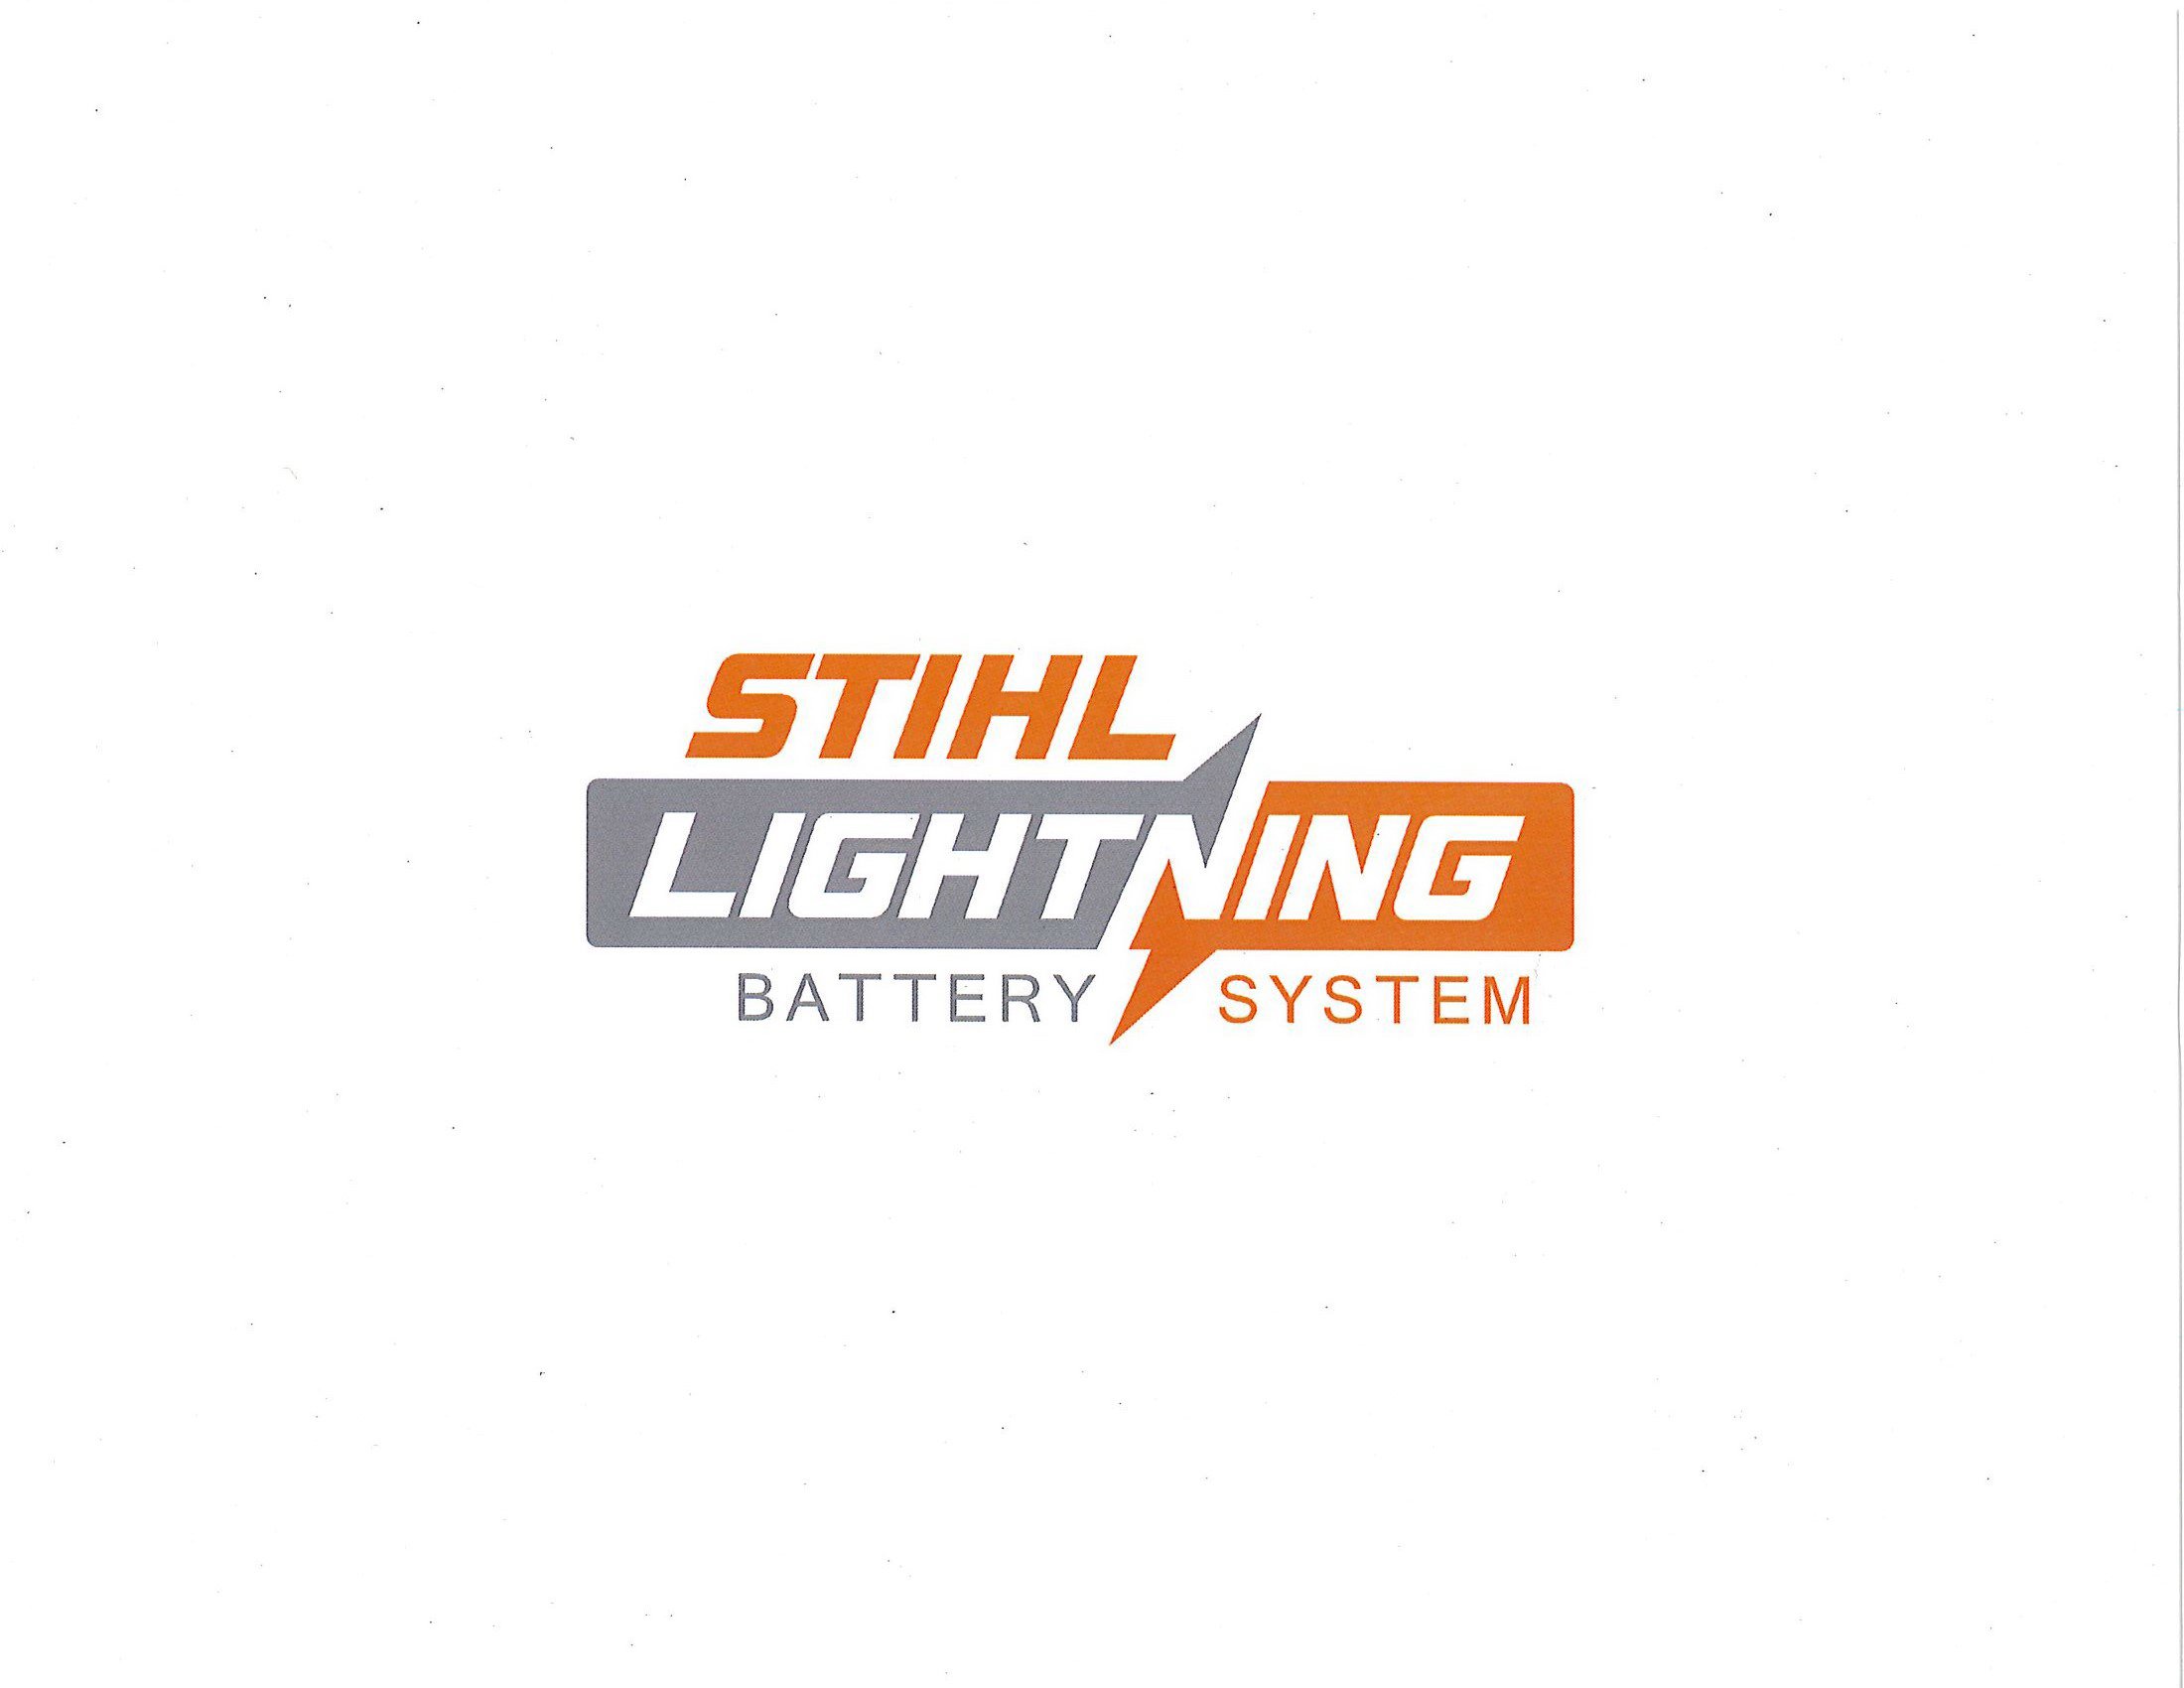  STIHL LIGHTNING BATTERY SYSTEM